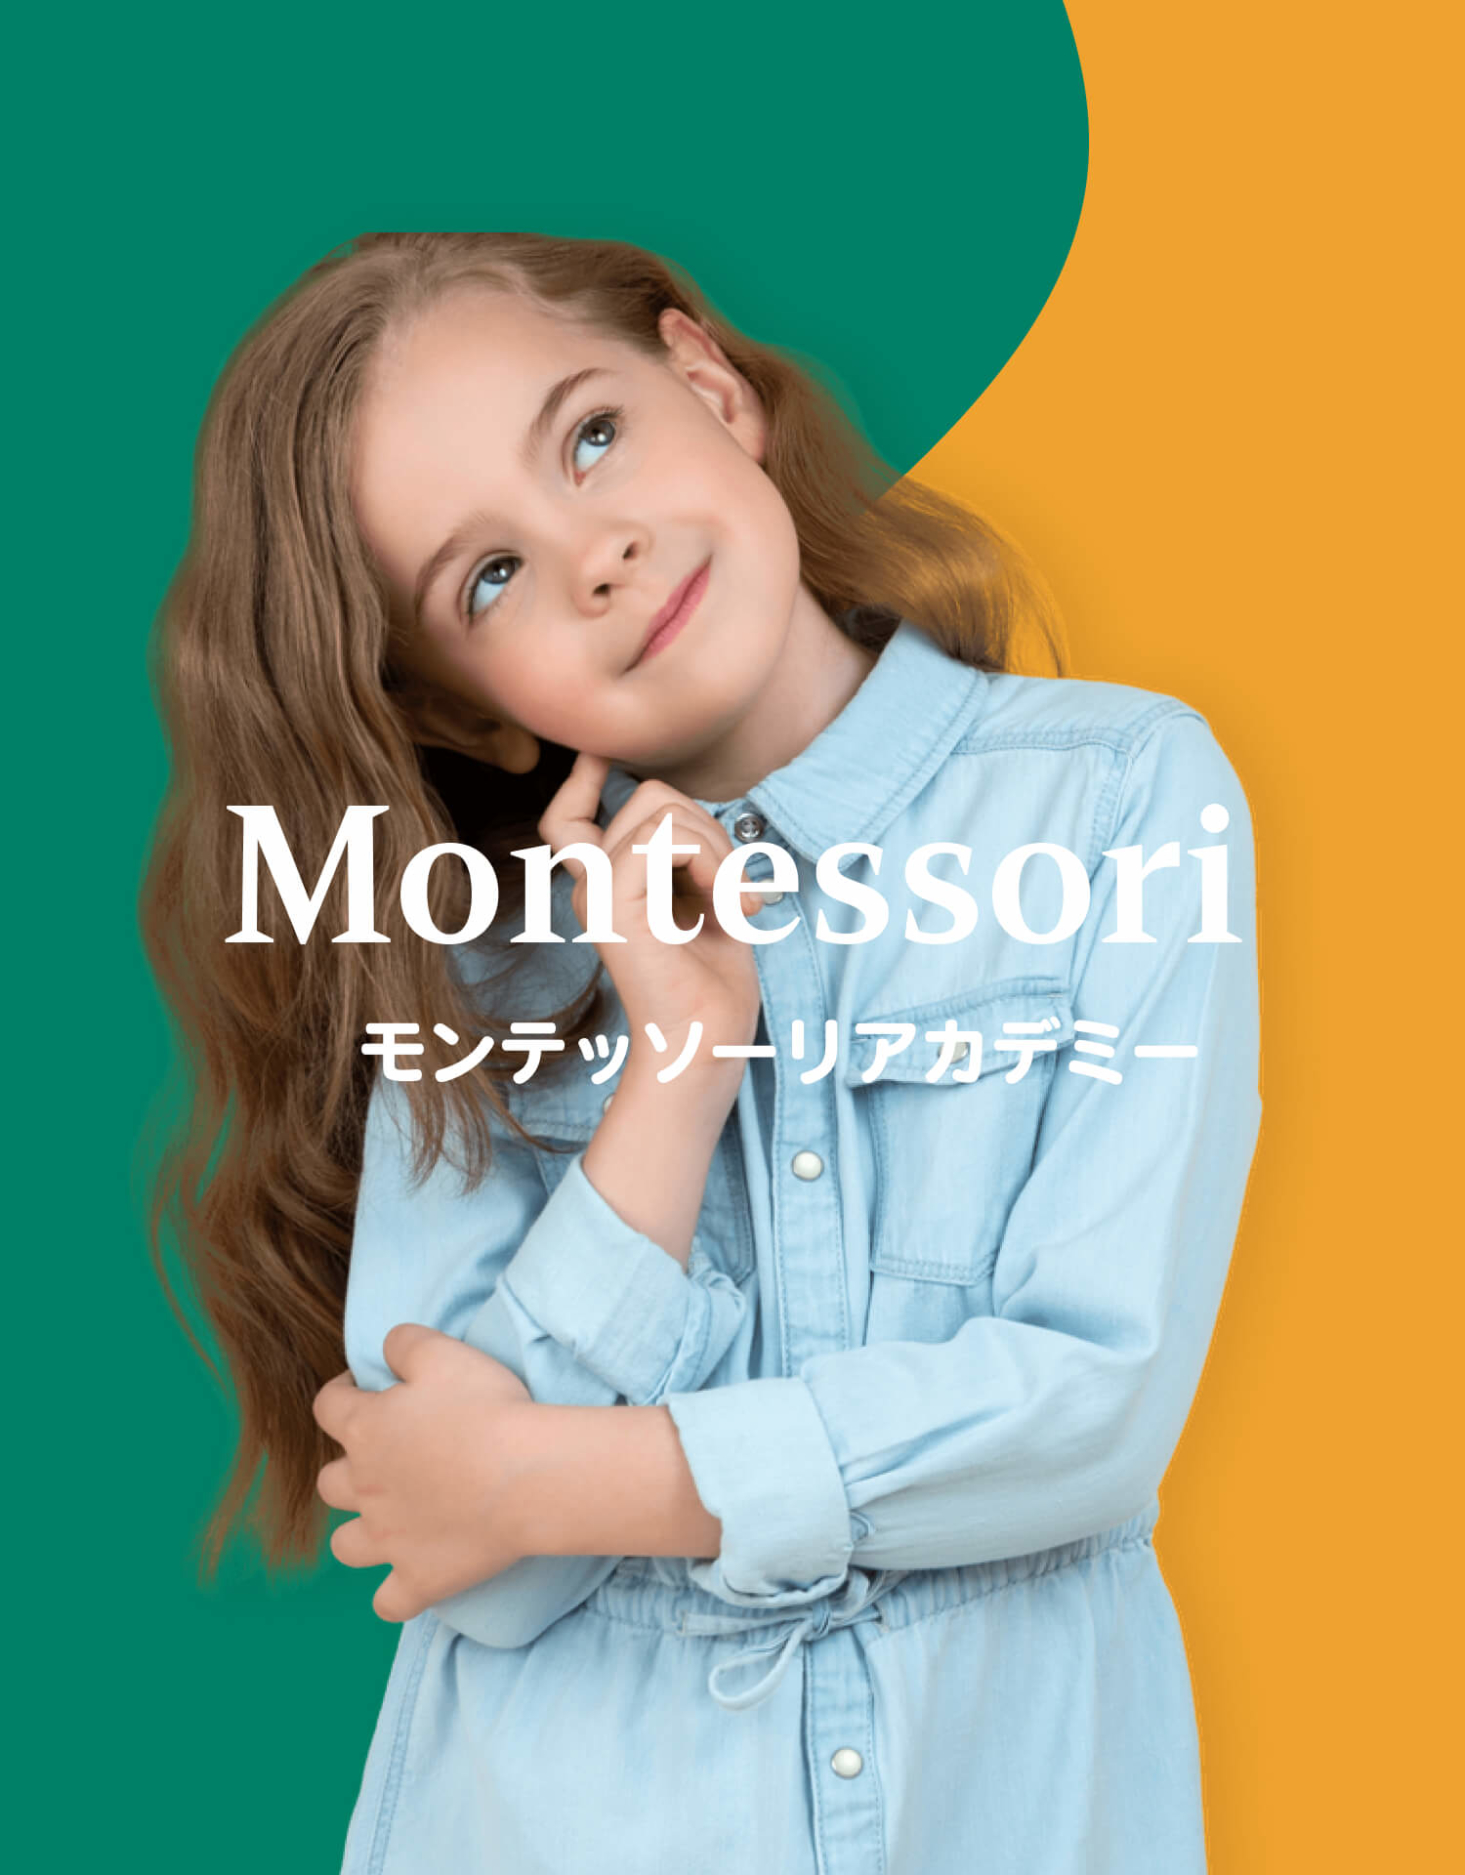 T.N.G Montessori Academy